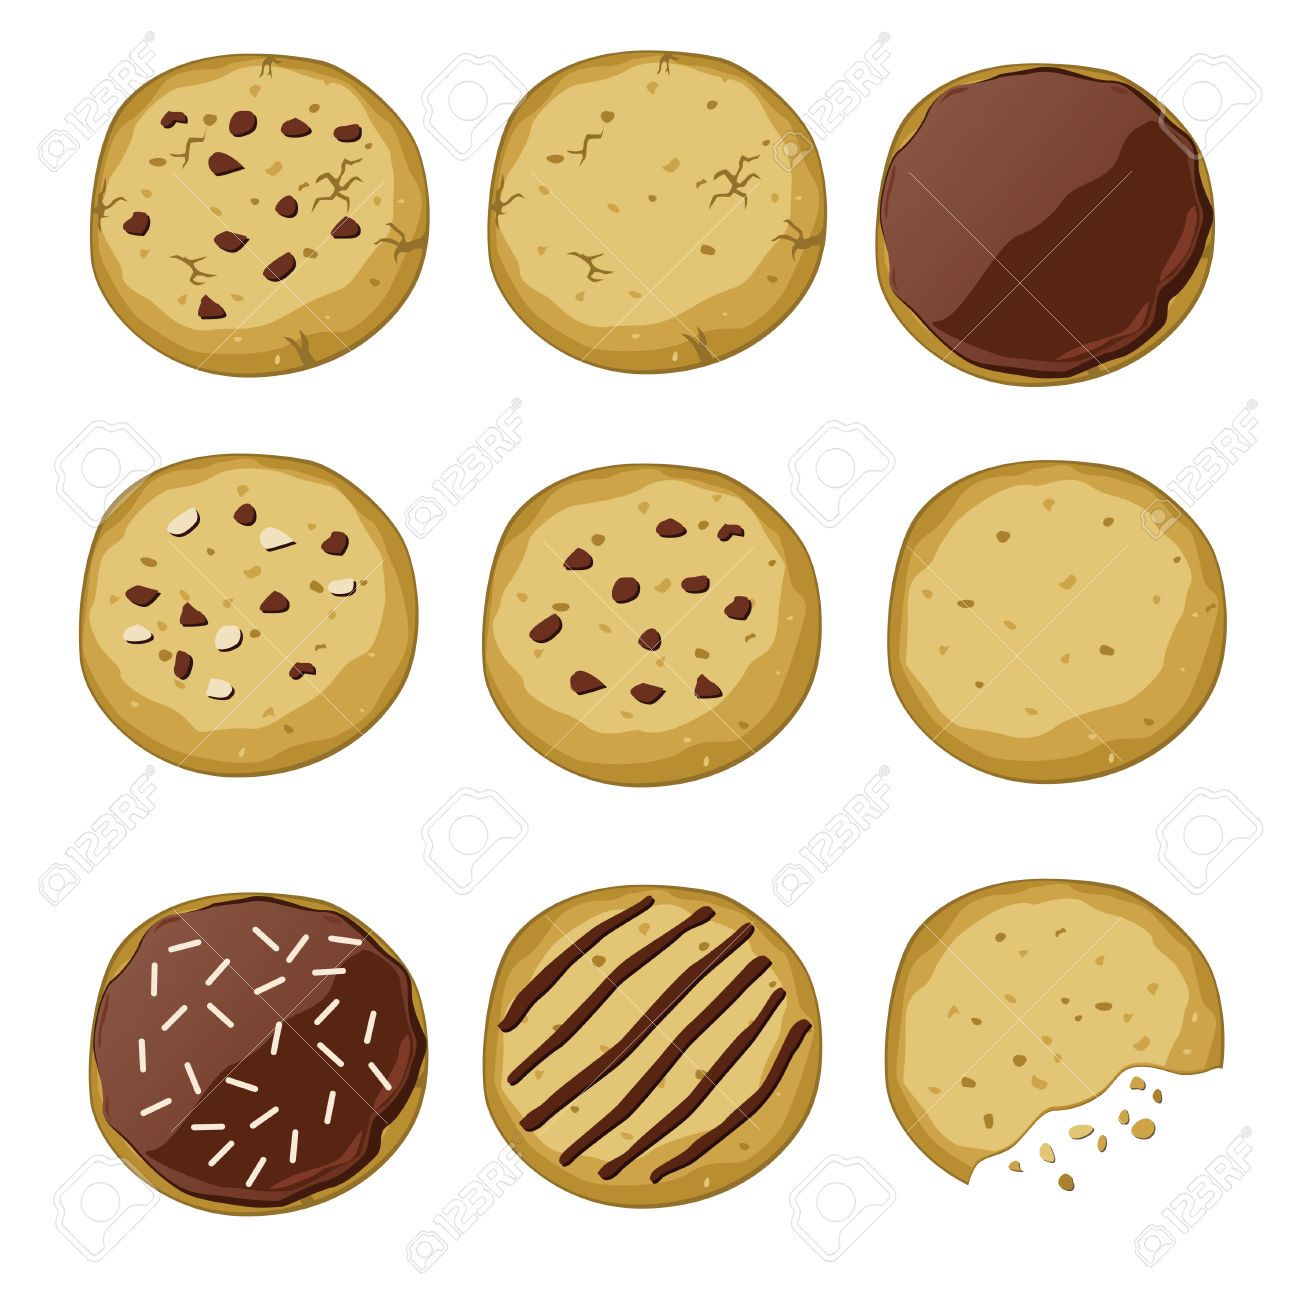 cookies clipart illustration